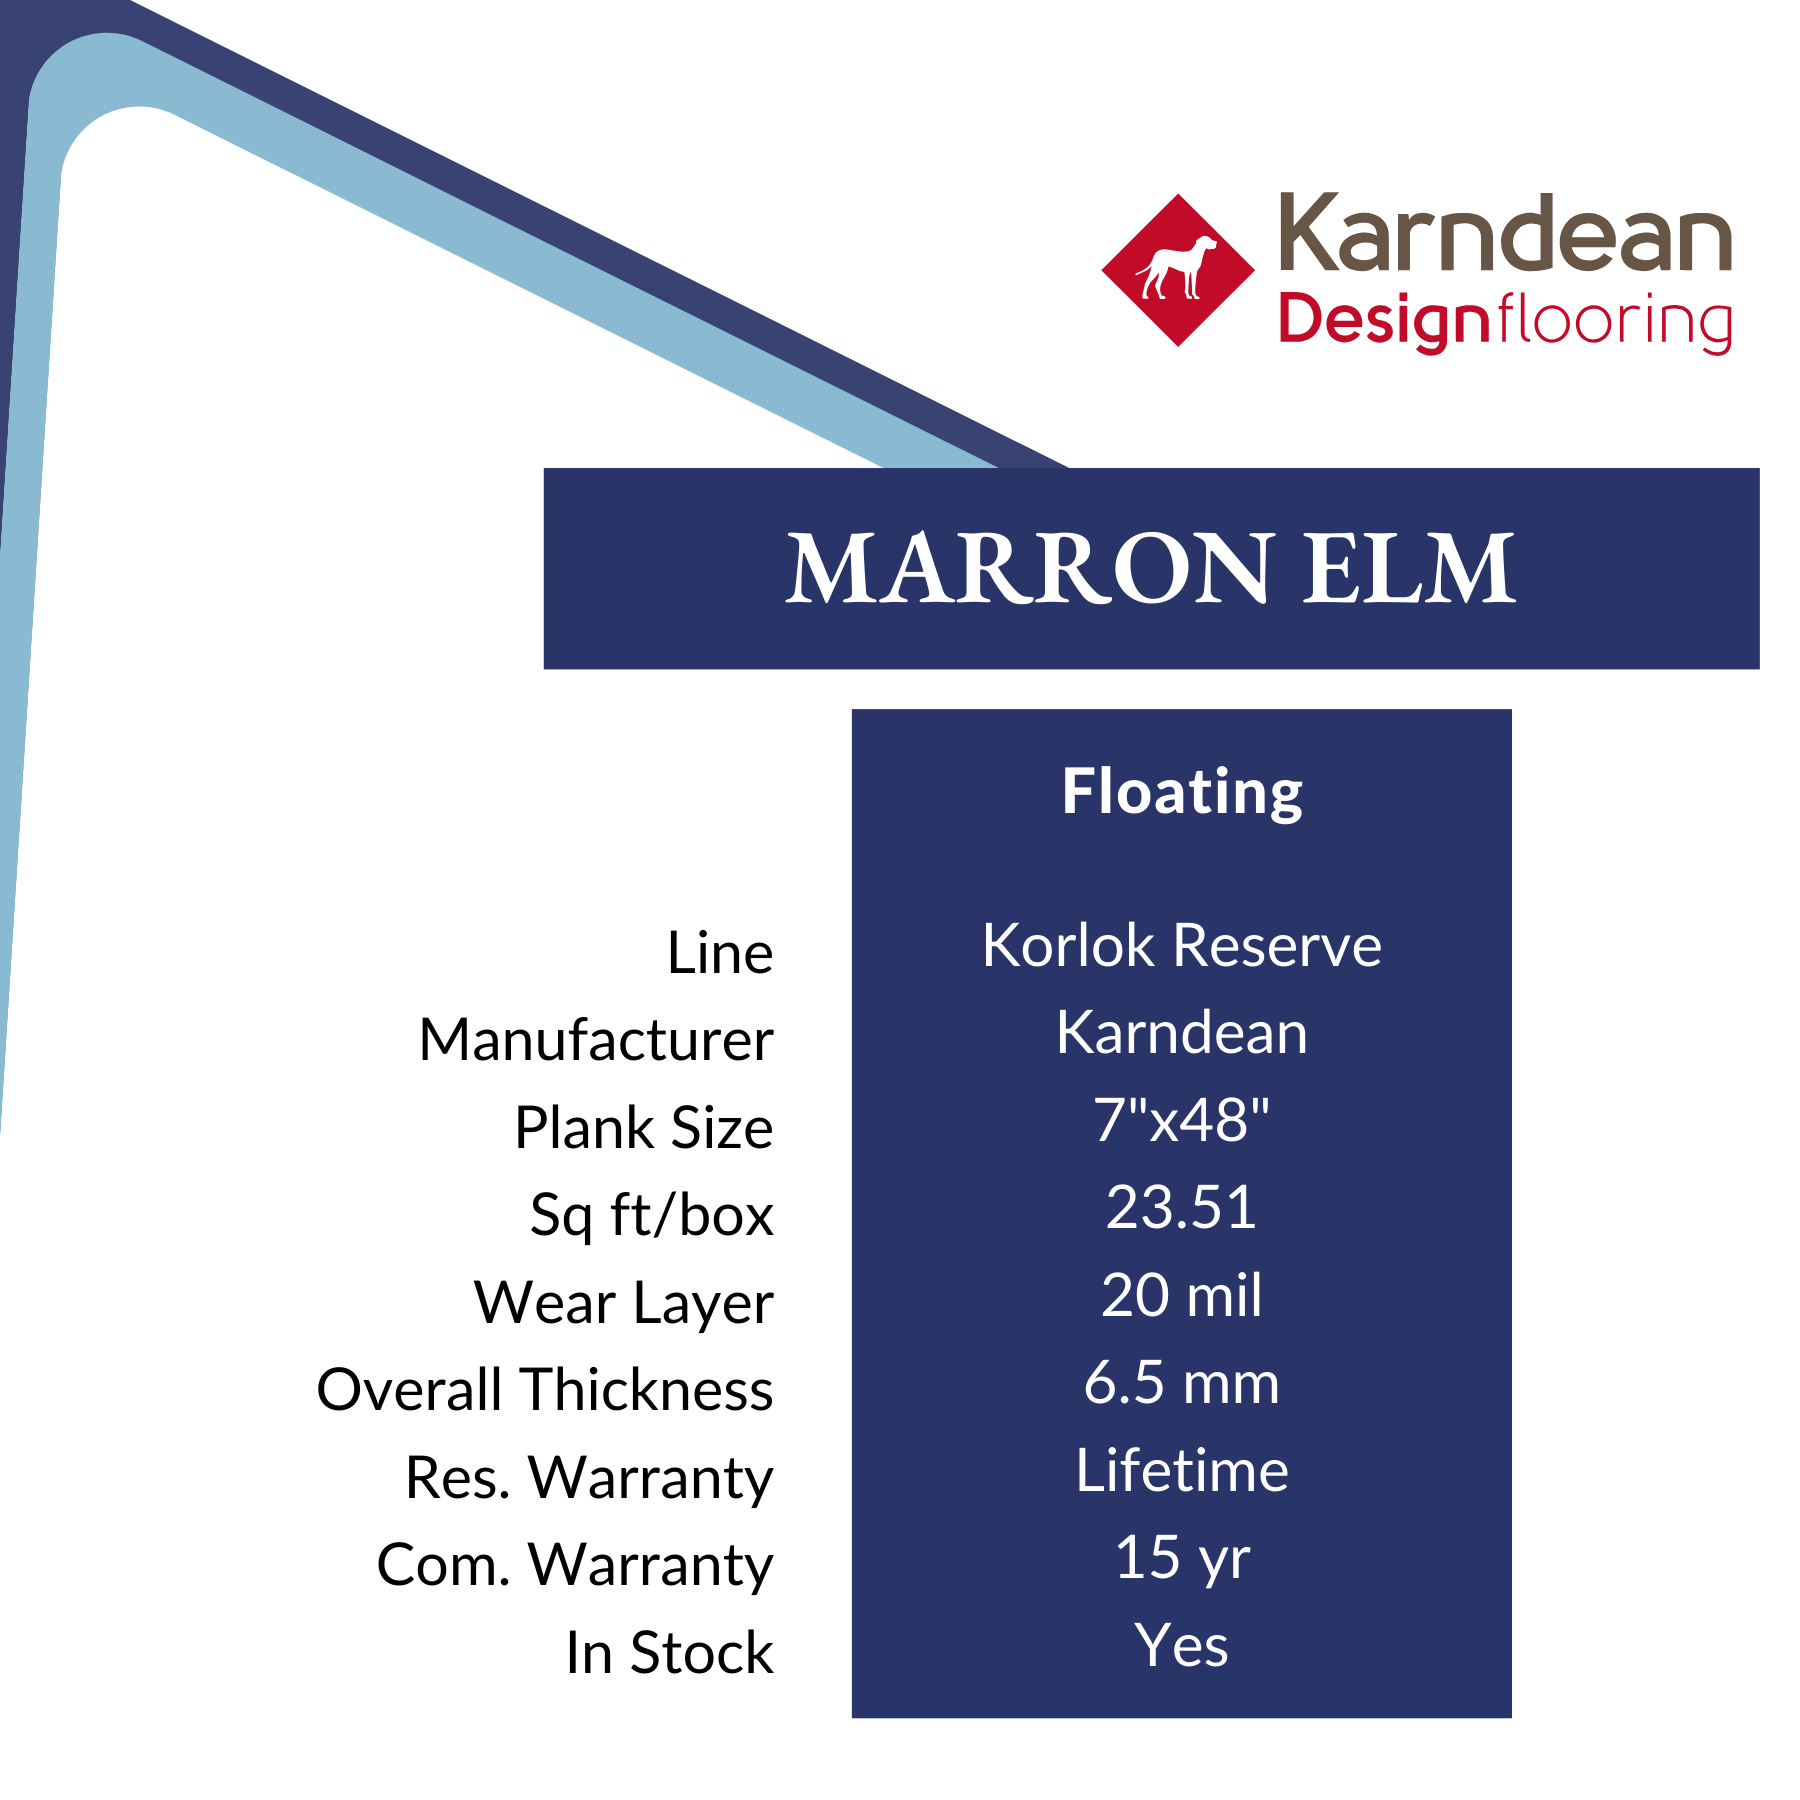 Marron Elm Luxury Vinyl Flooring from Karndean, sold at Calhoun’s, Springfield, IL specs